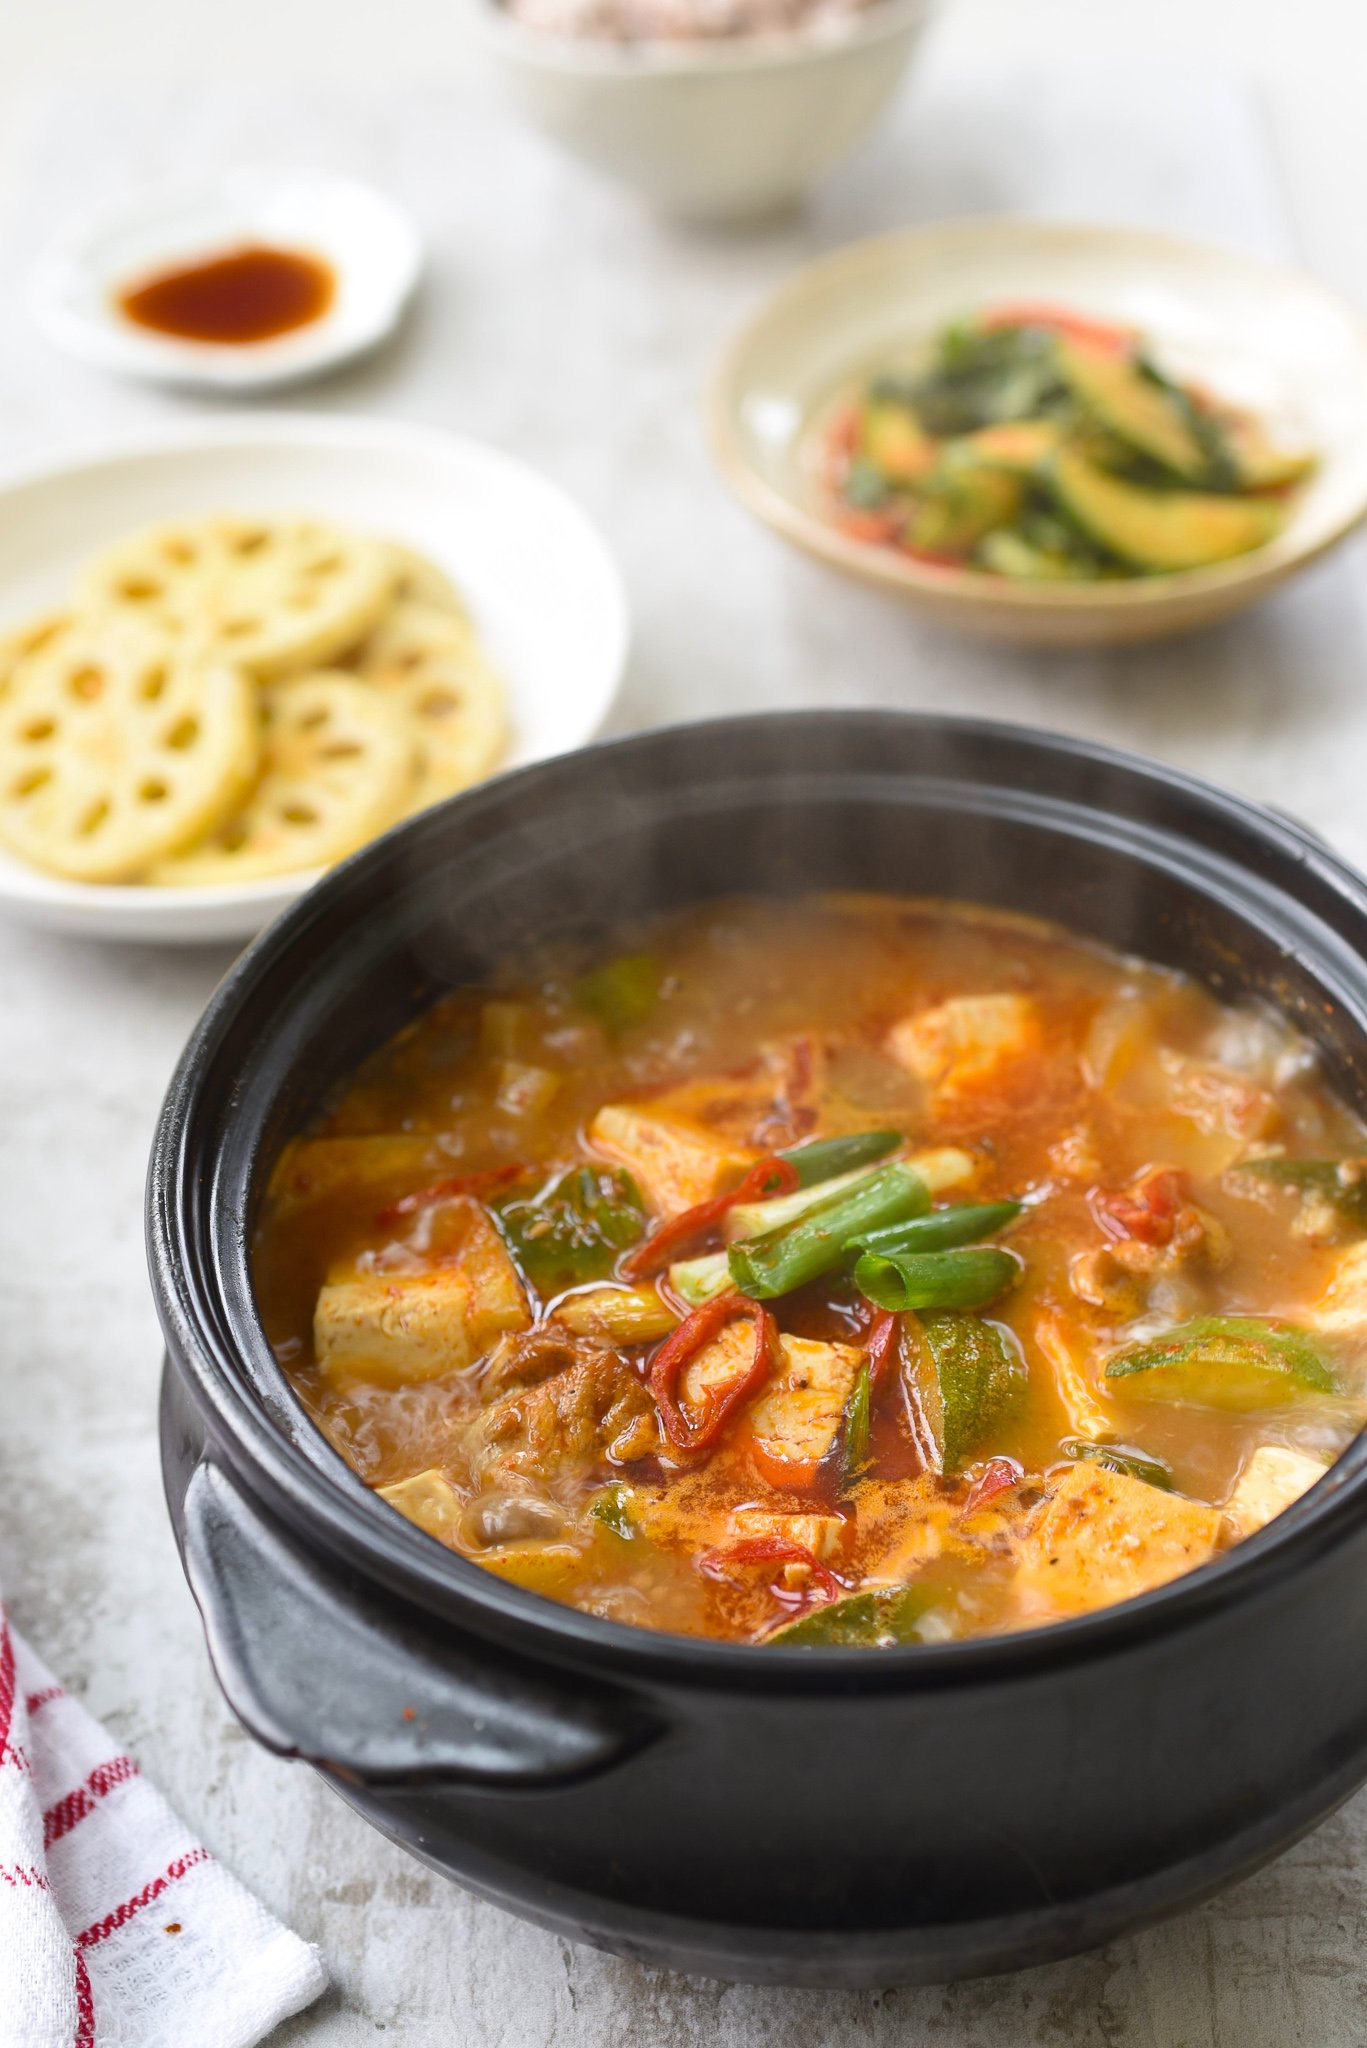 DSC 0686 - Doenjang Jjigae (Soybean Paste Stew with Pork and Vegetables)